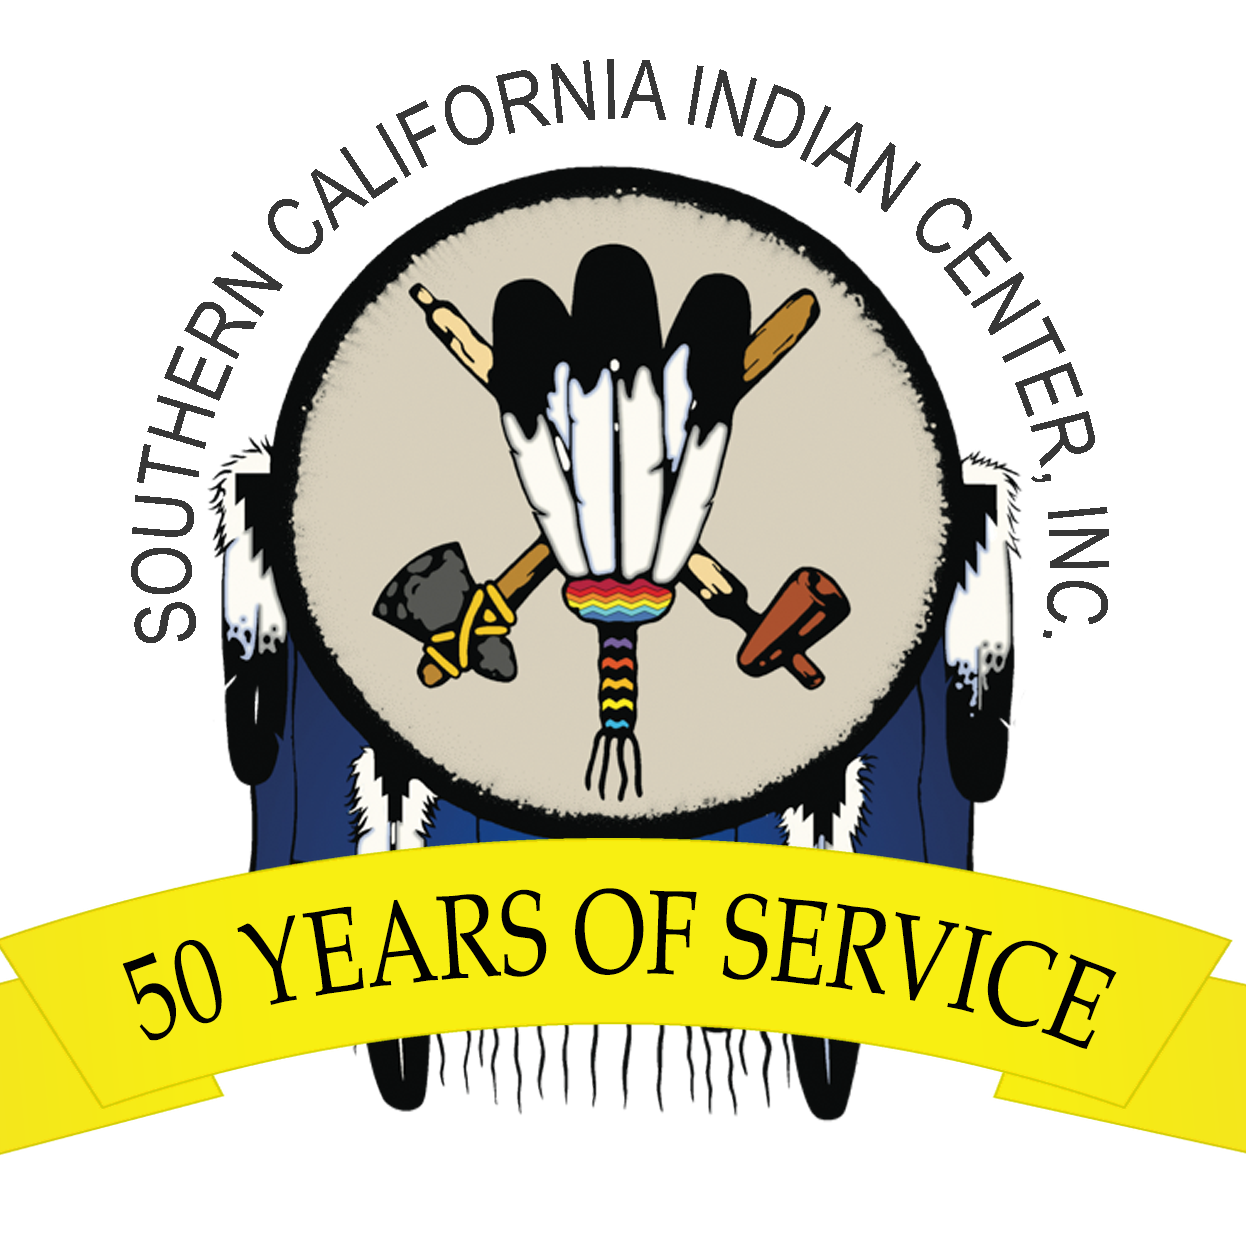 Native American Organization in San Jose California - Southern California Indian Center, Inc.